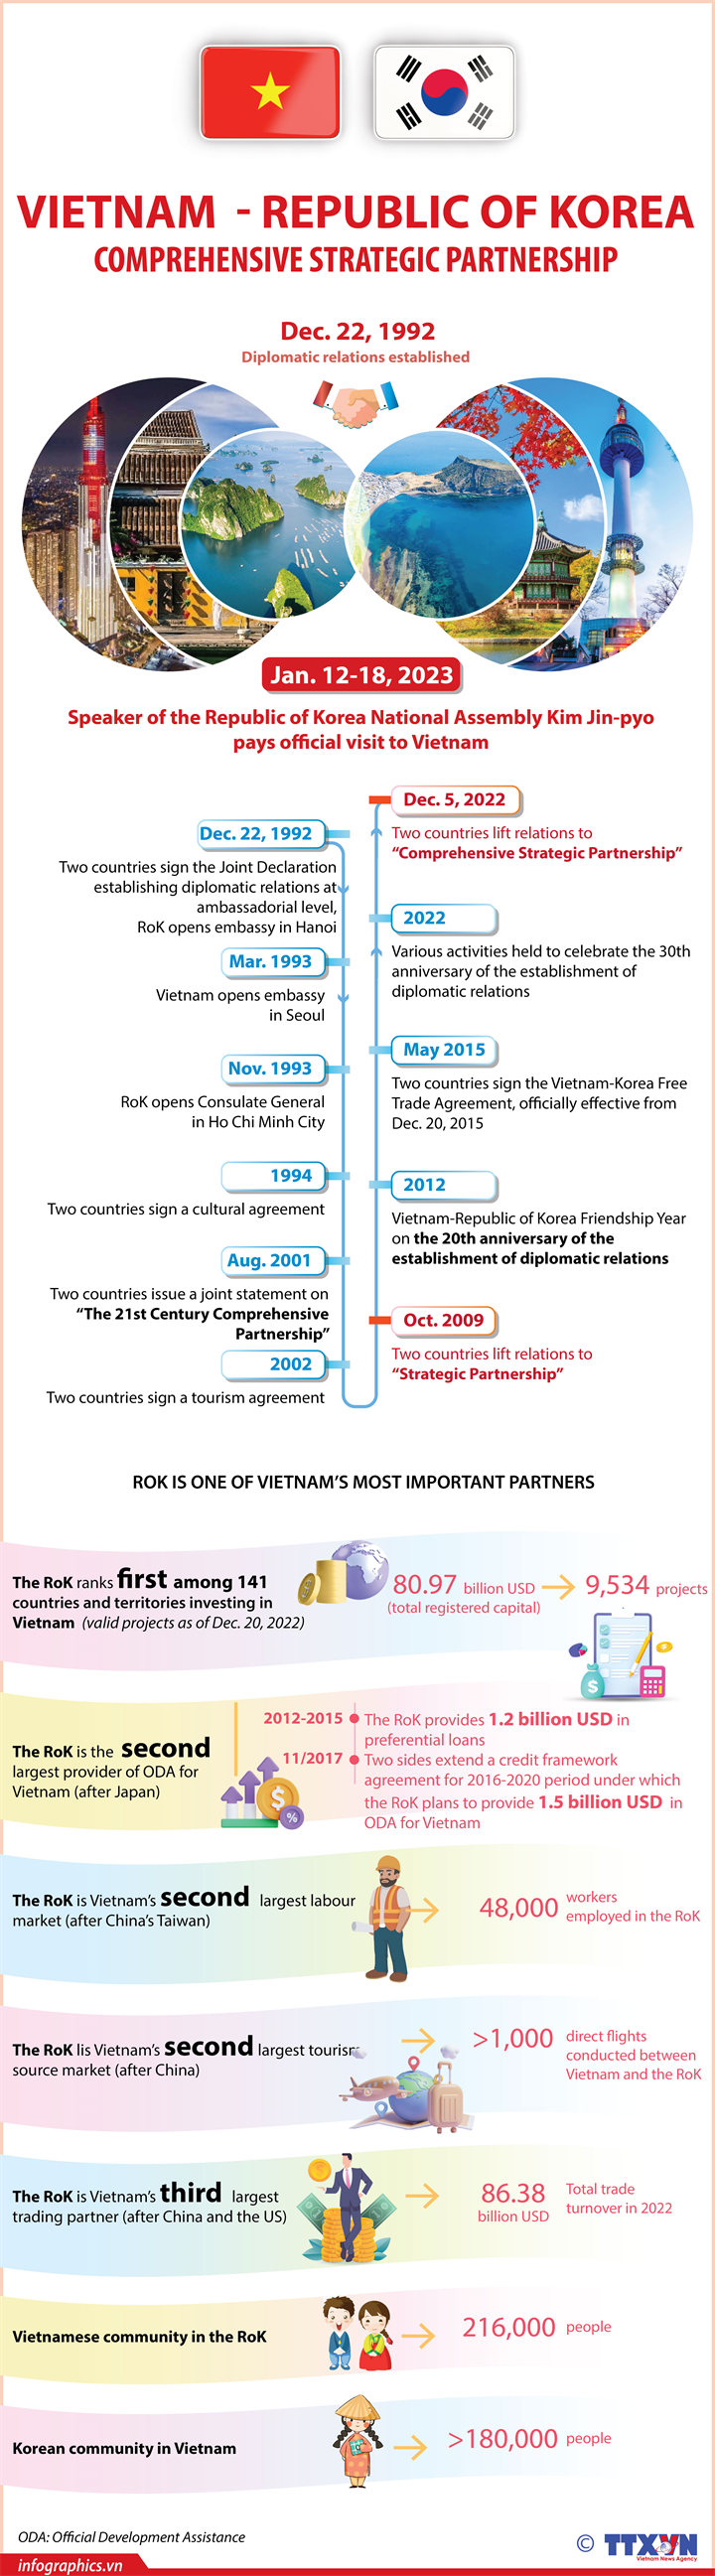 Vietnam - Republic of Korea Comprehensive Strategic Partnership 